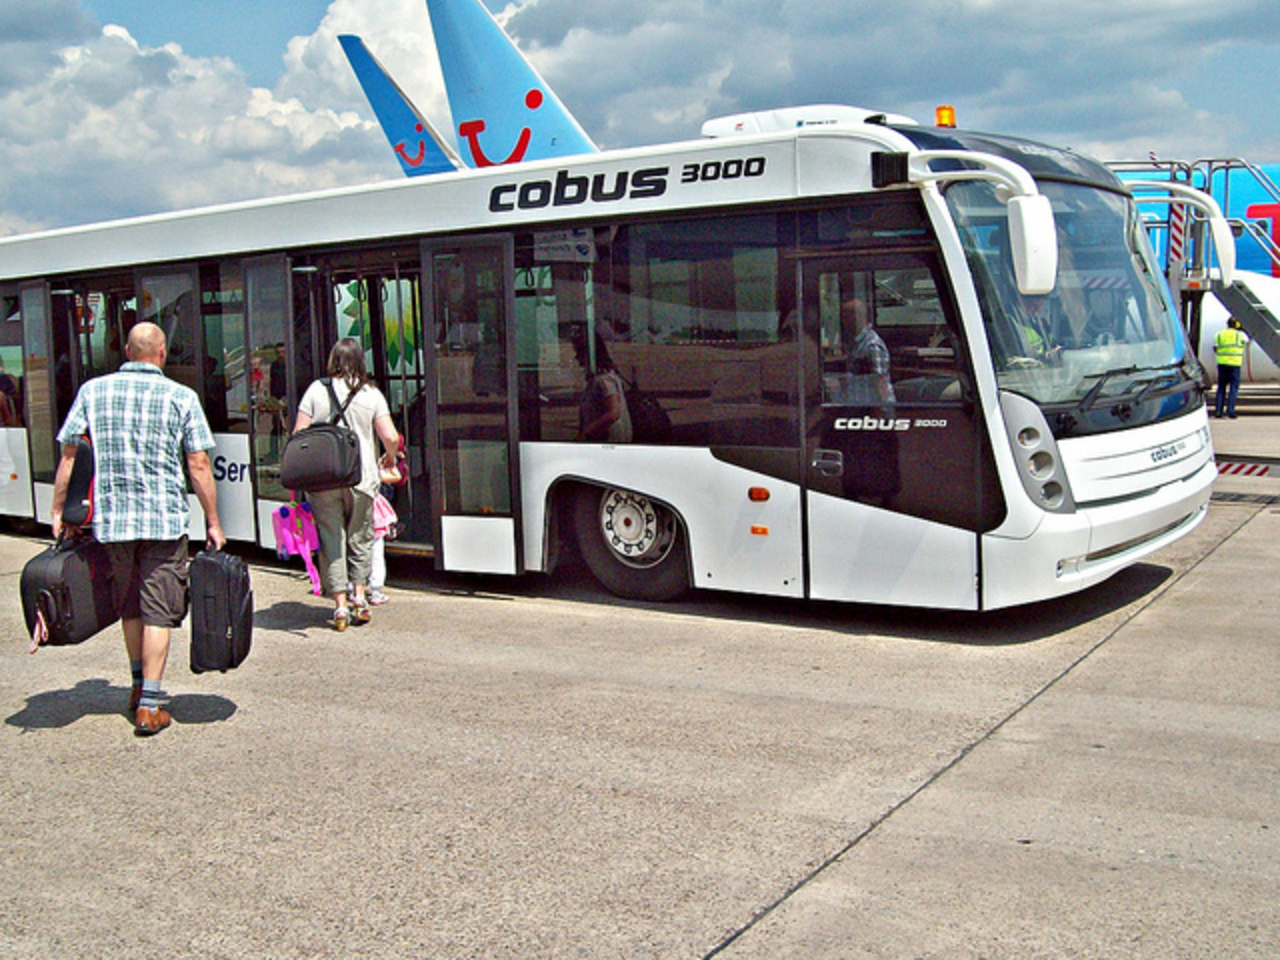 25 Contrac Cobus 3000 | Flickr - Photo Sharing!